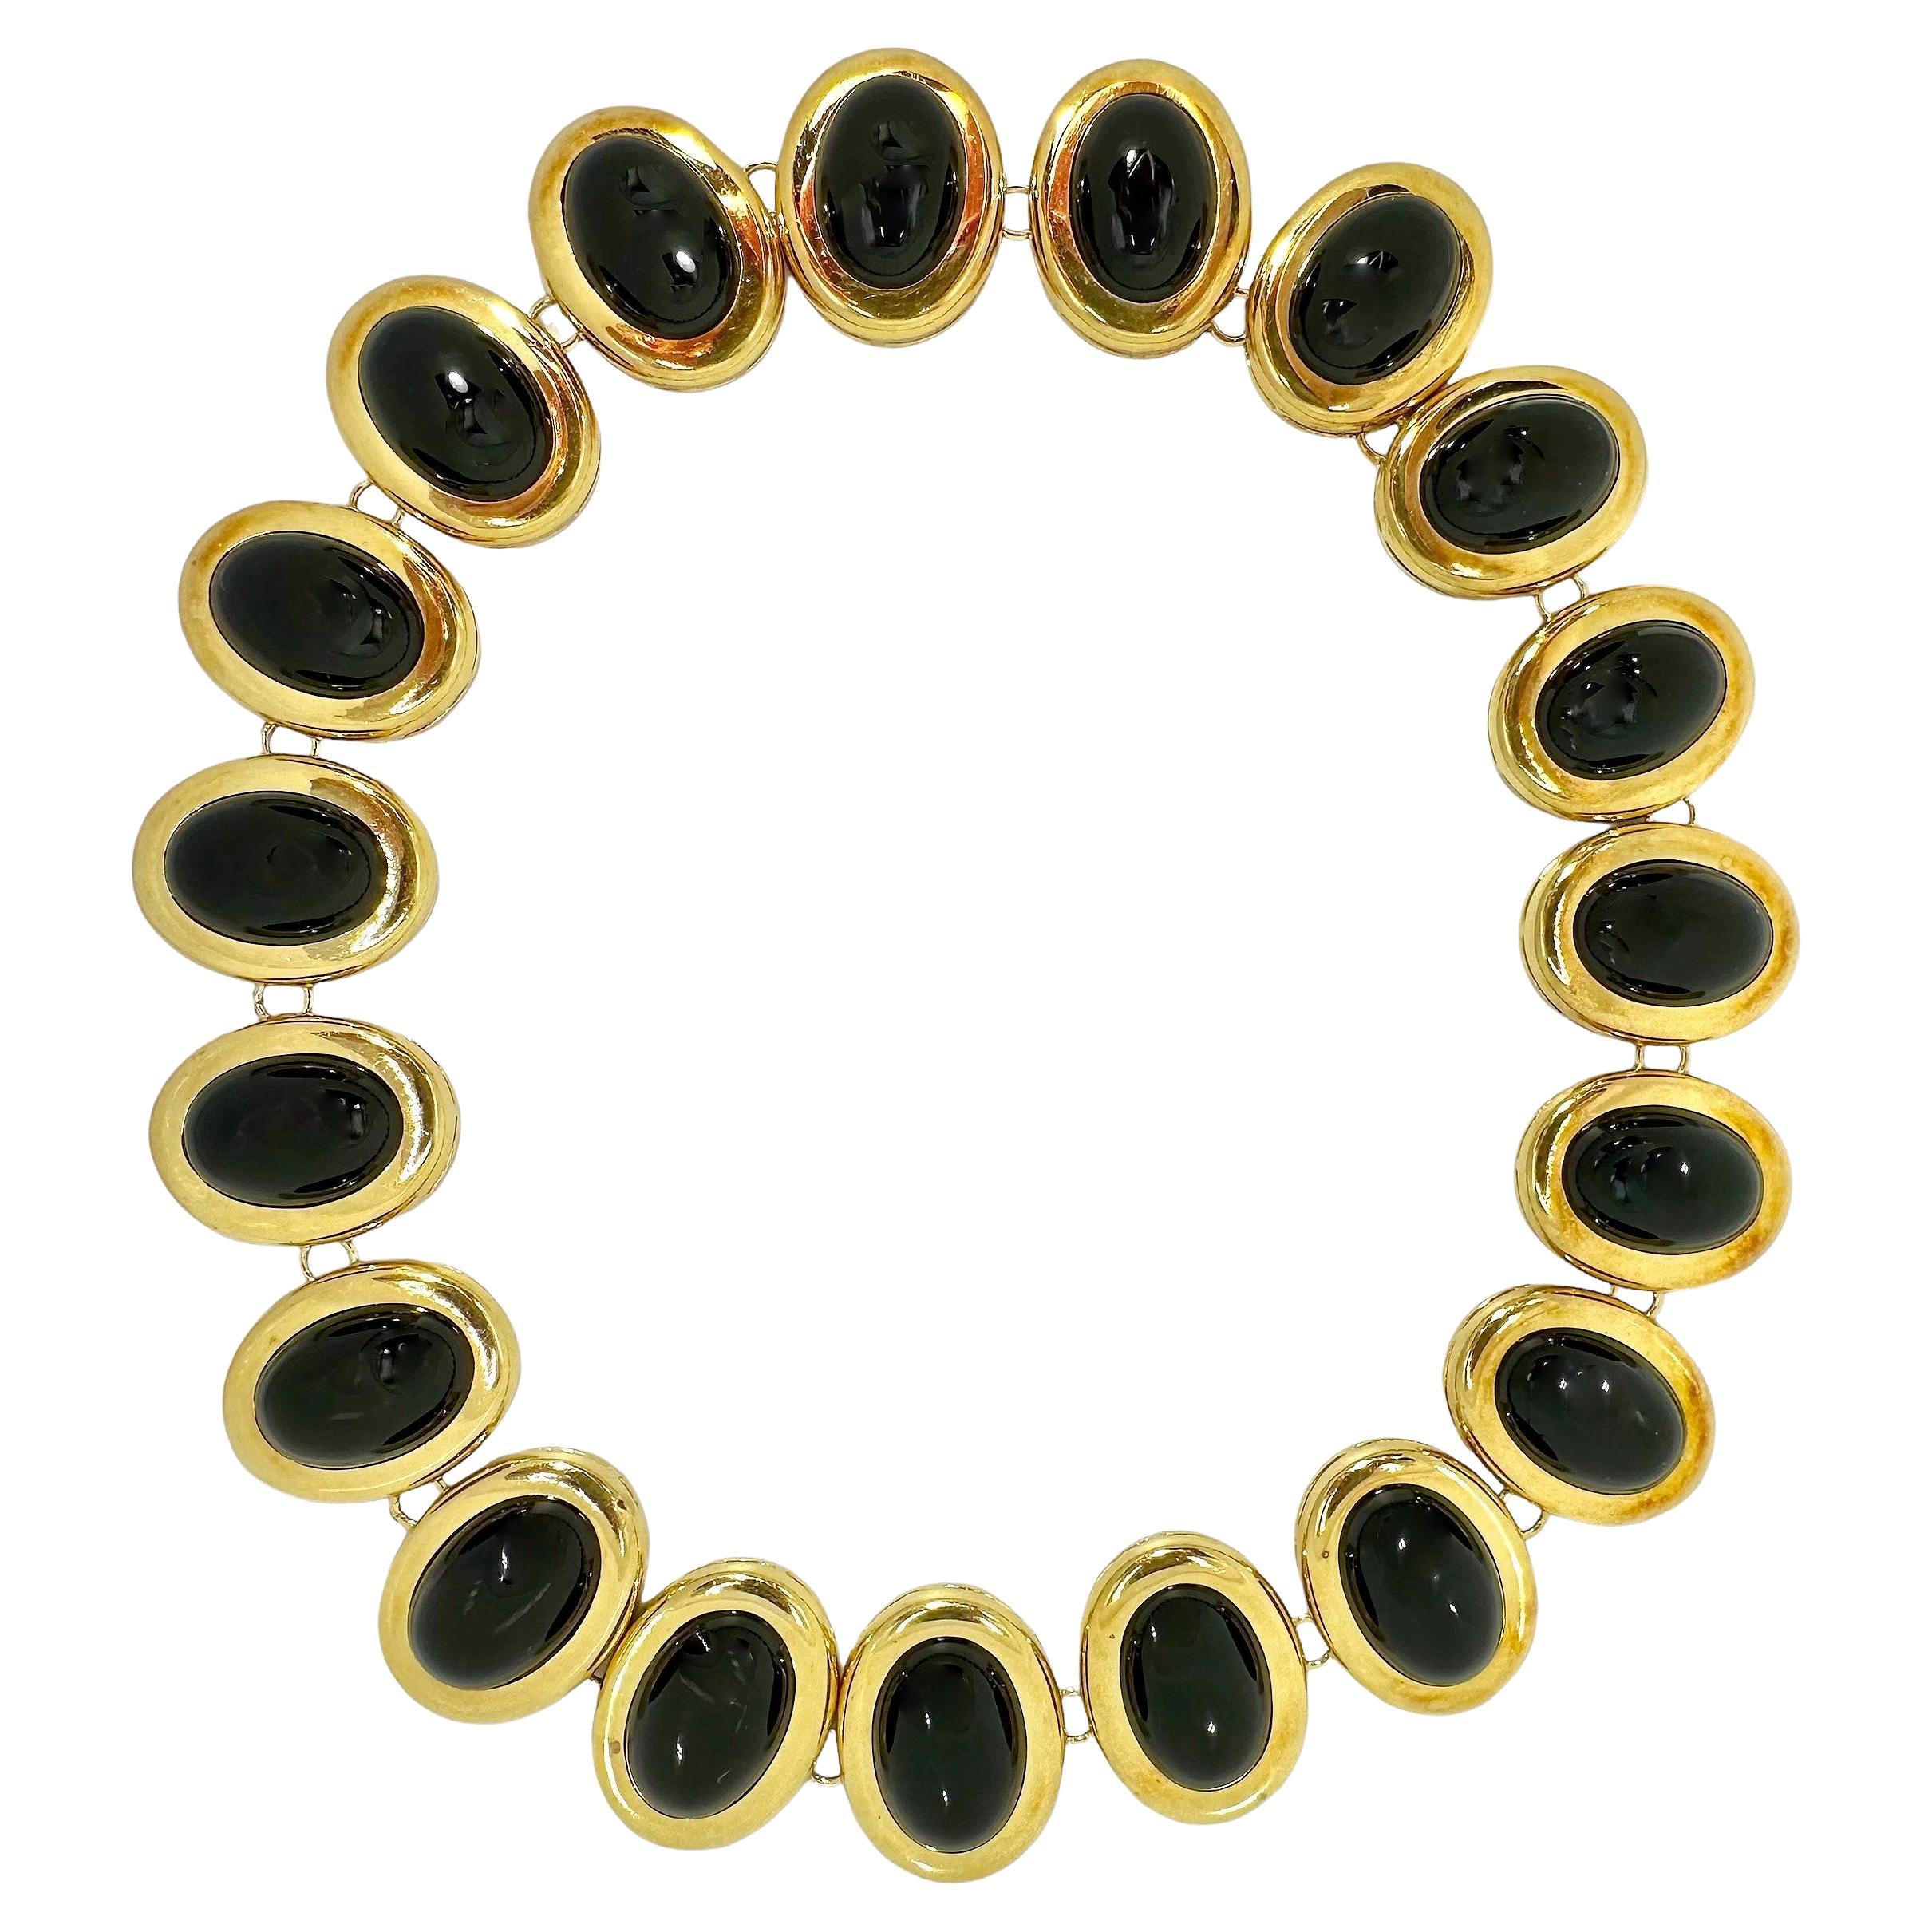 Stylish Mid-20th Century 18K Yellow Gold and Black Onyx Choker Length Necklace